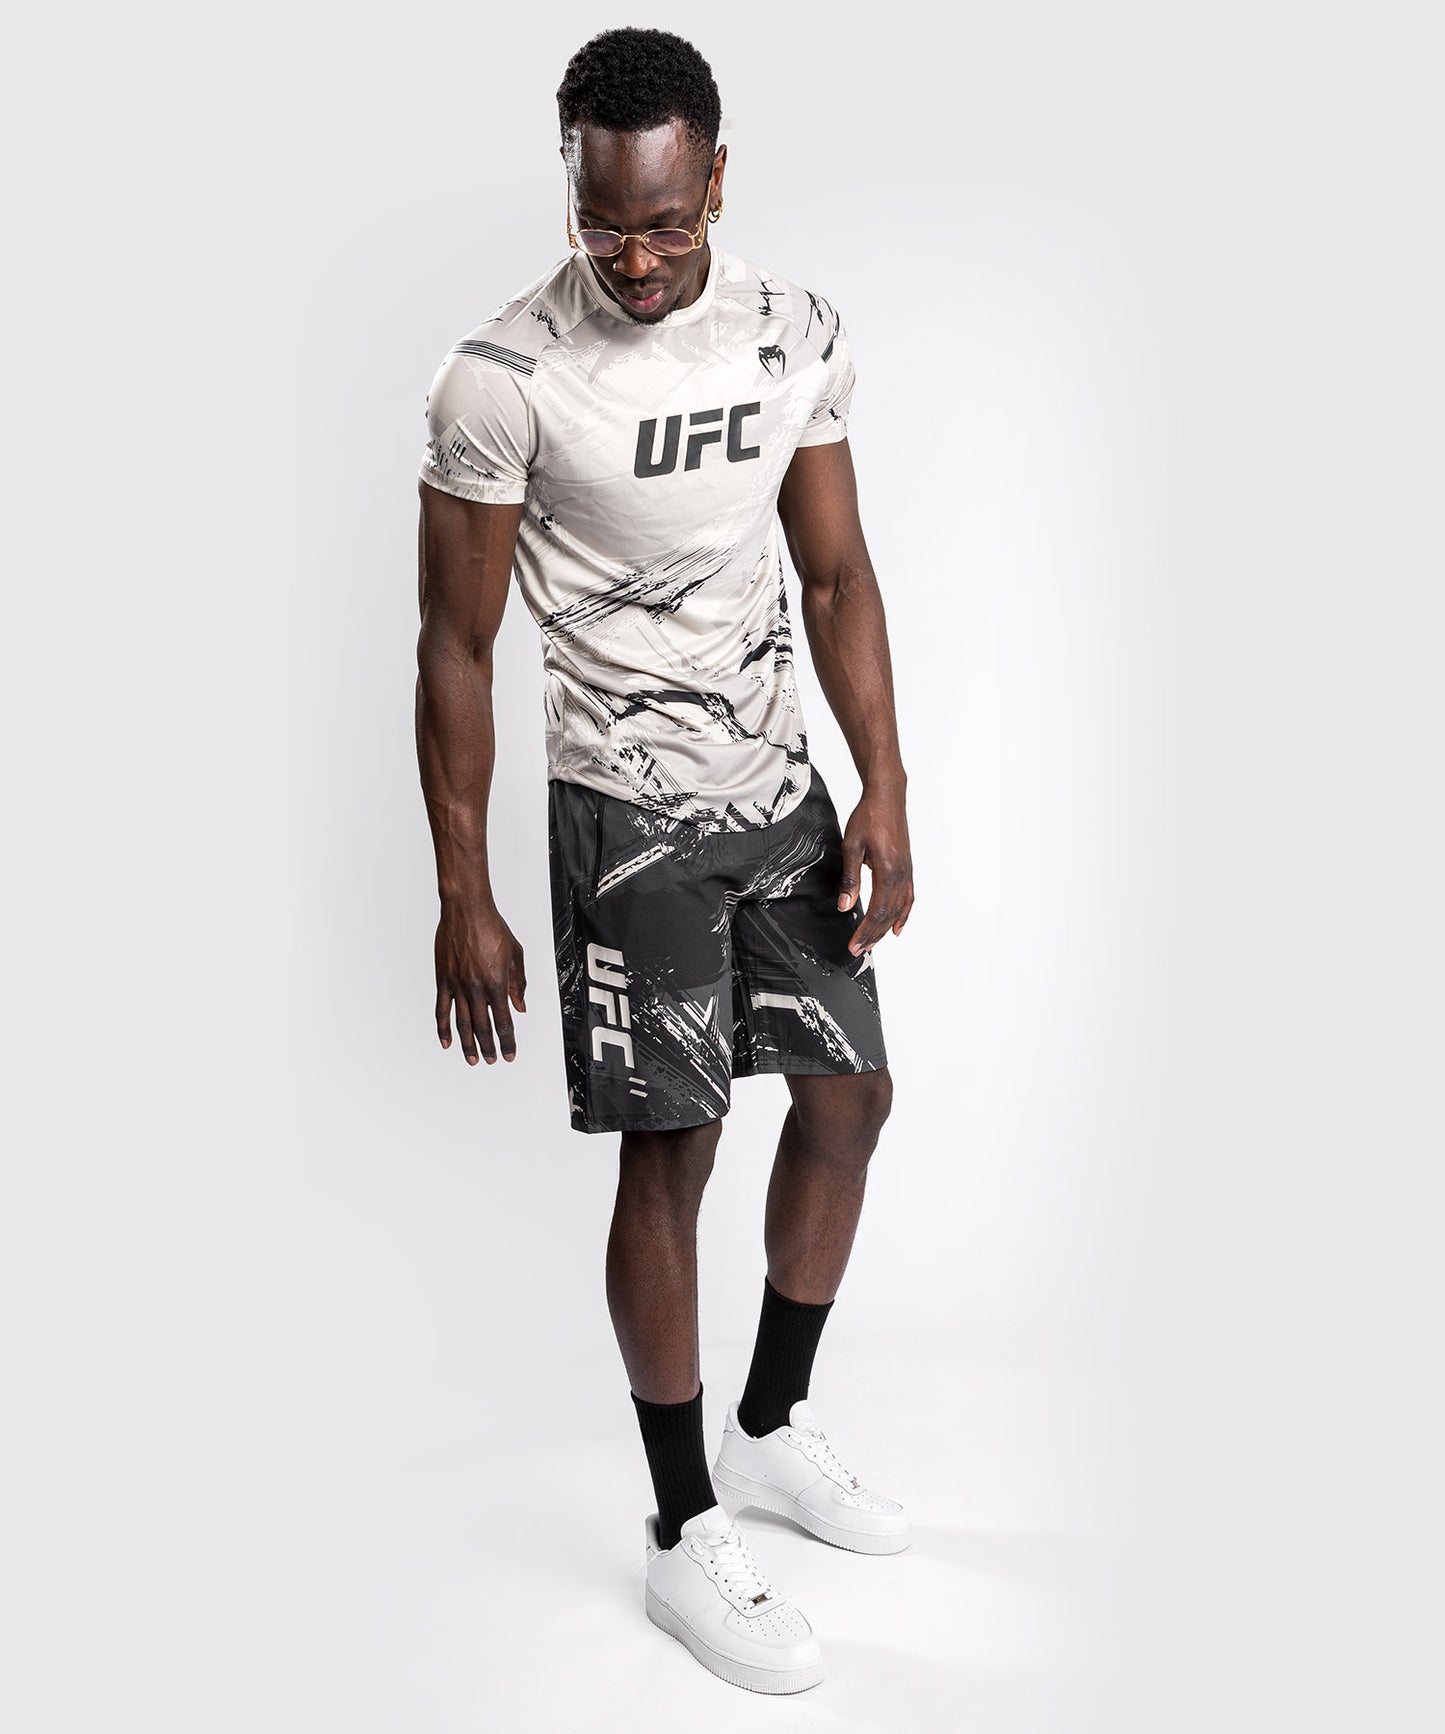 UFC Venum gear: See photos of new fighter uniforms